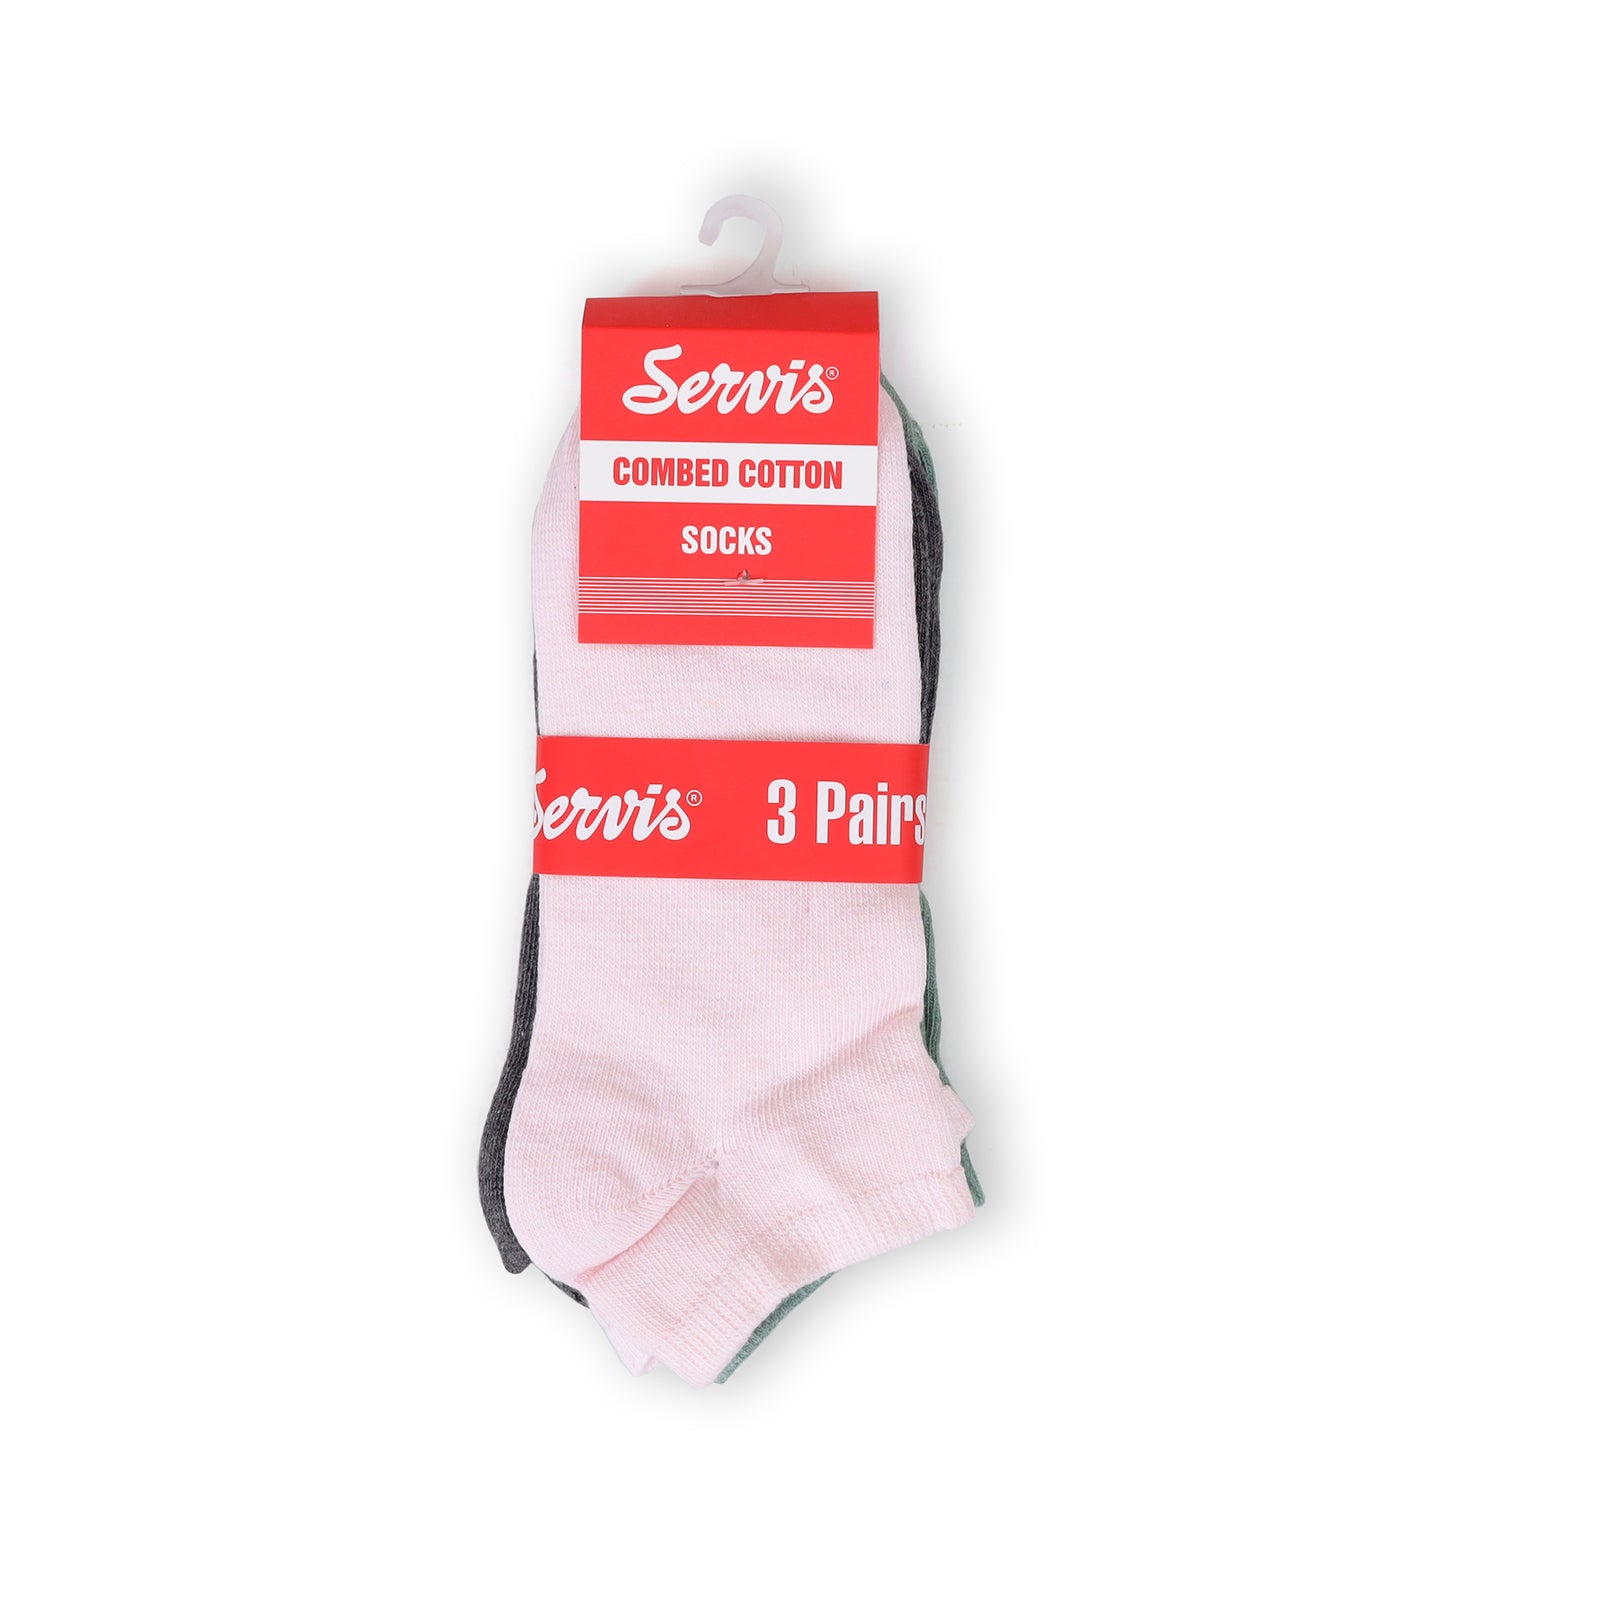 A-SB-0300204- Socks